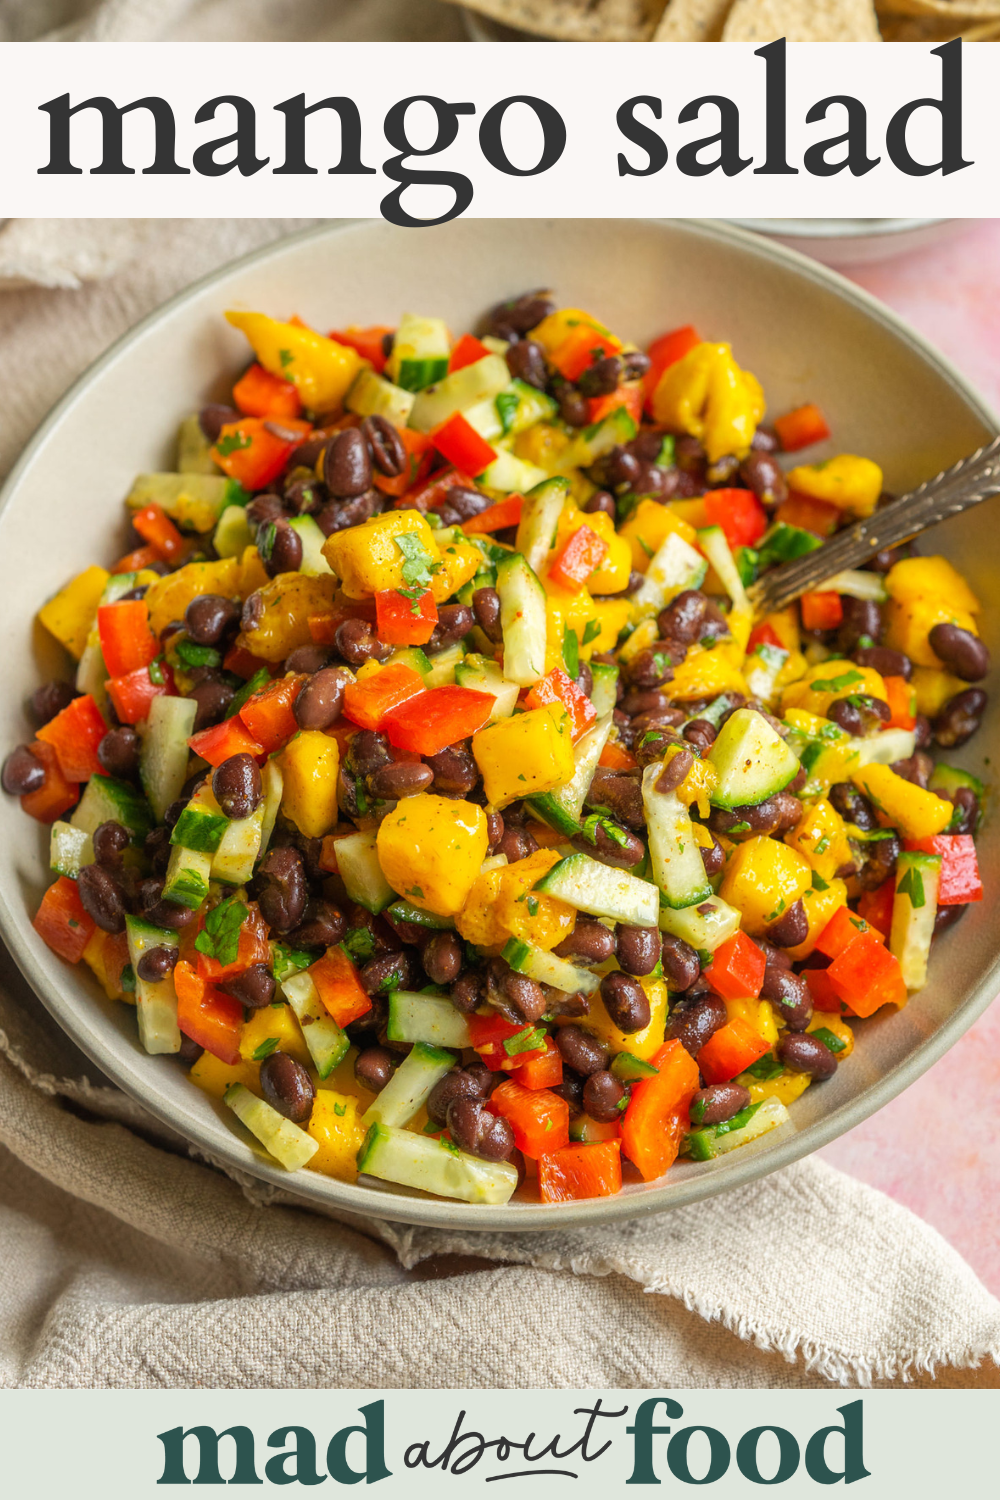 Image for pinning Mango Salad recipe on Pinterest